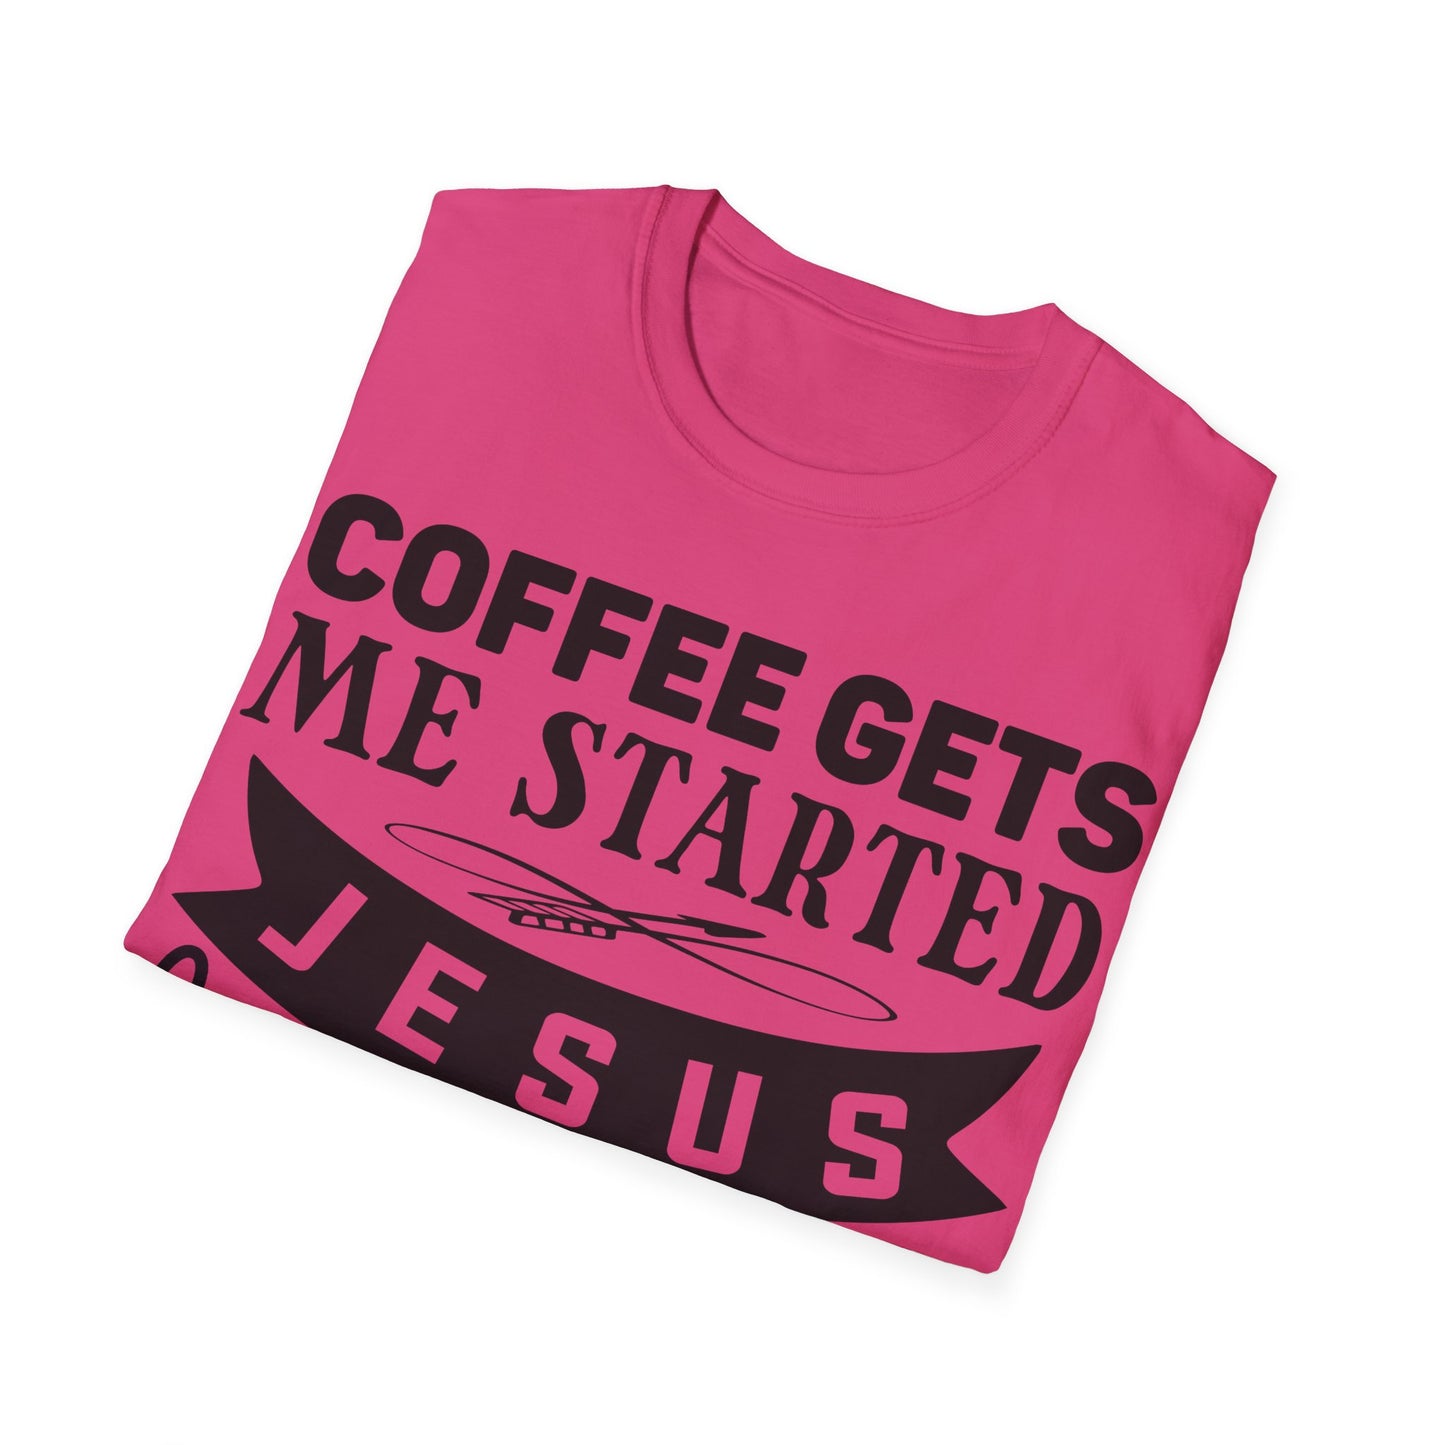 Coffee Gets Me Started Jesus Keeps Me Going Triple Viking T-Shirt